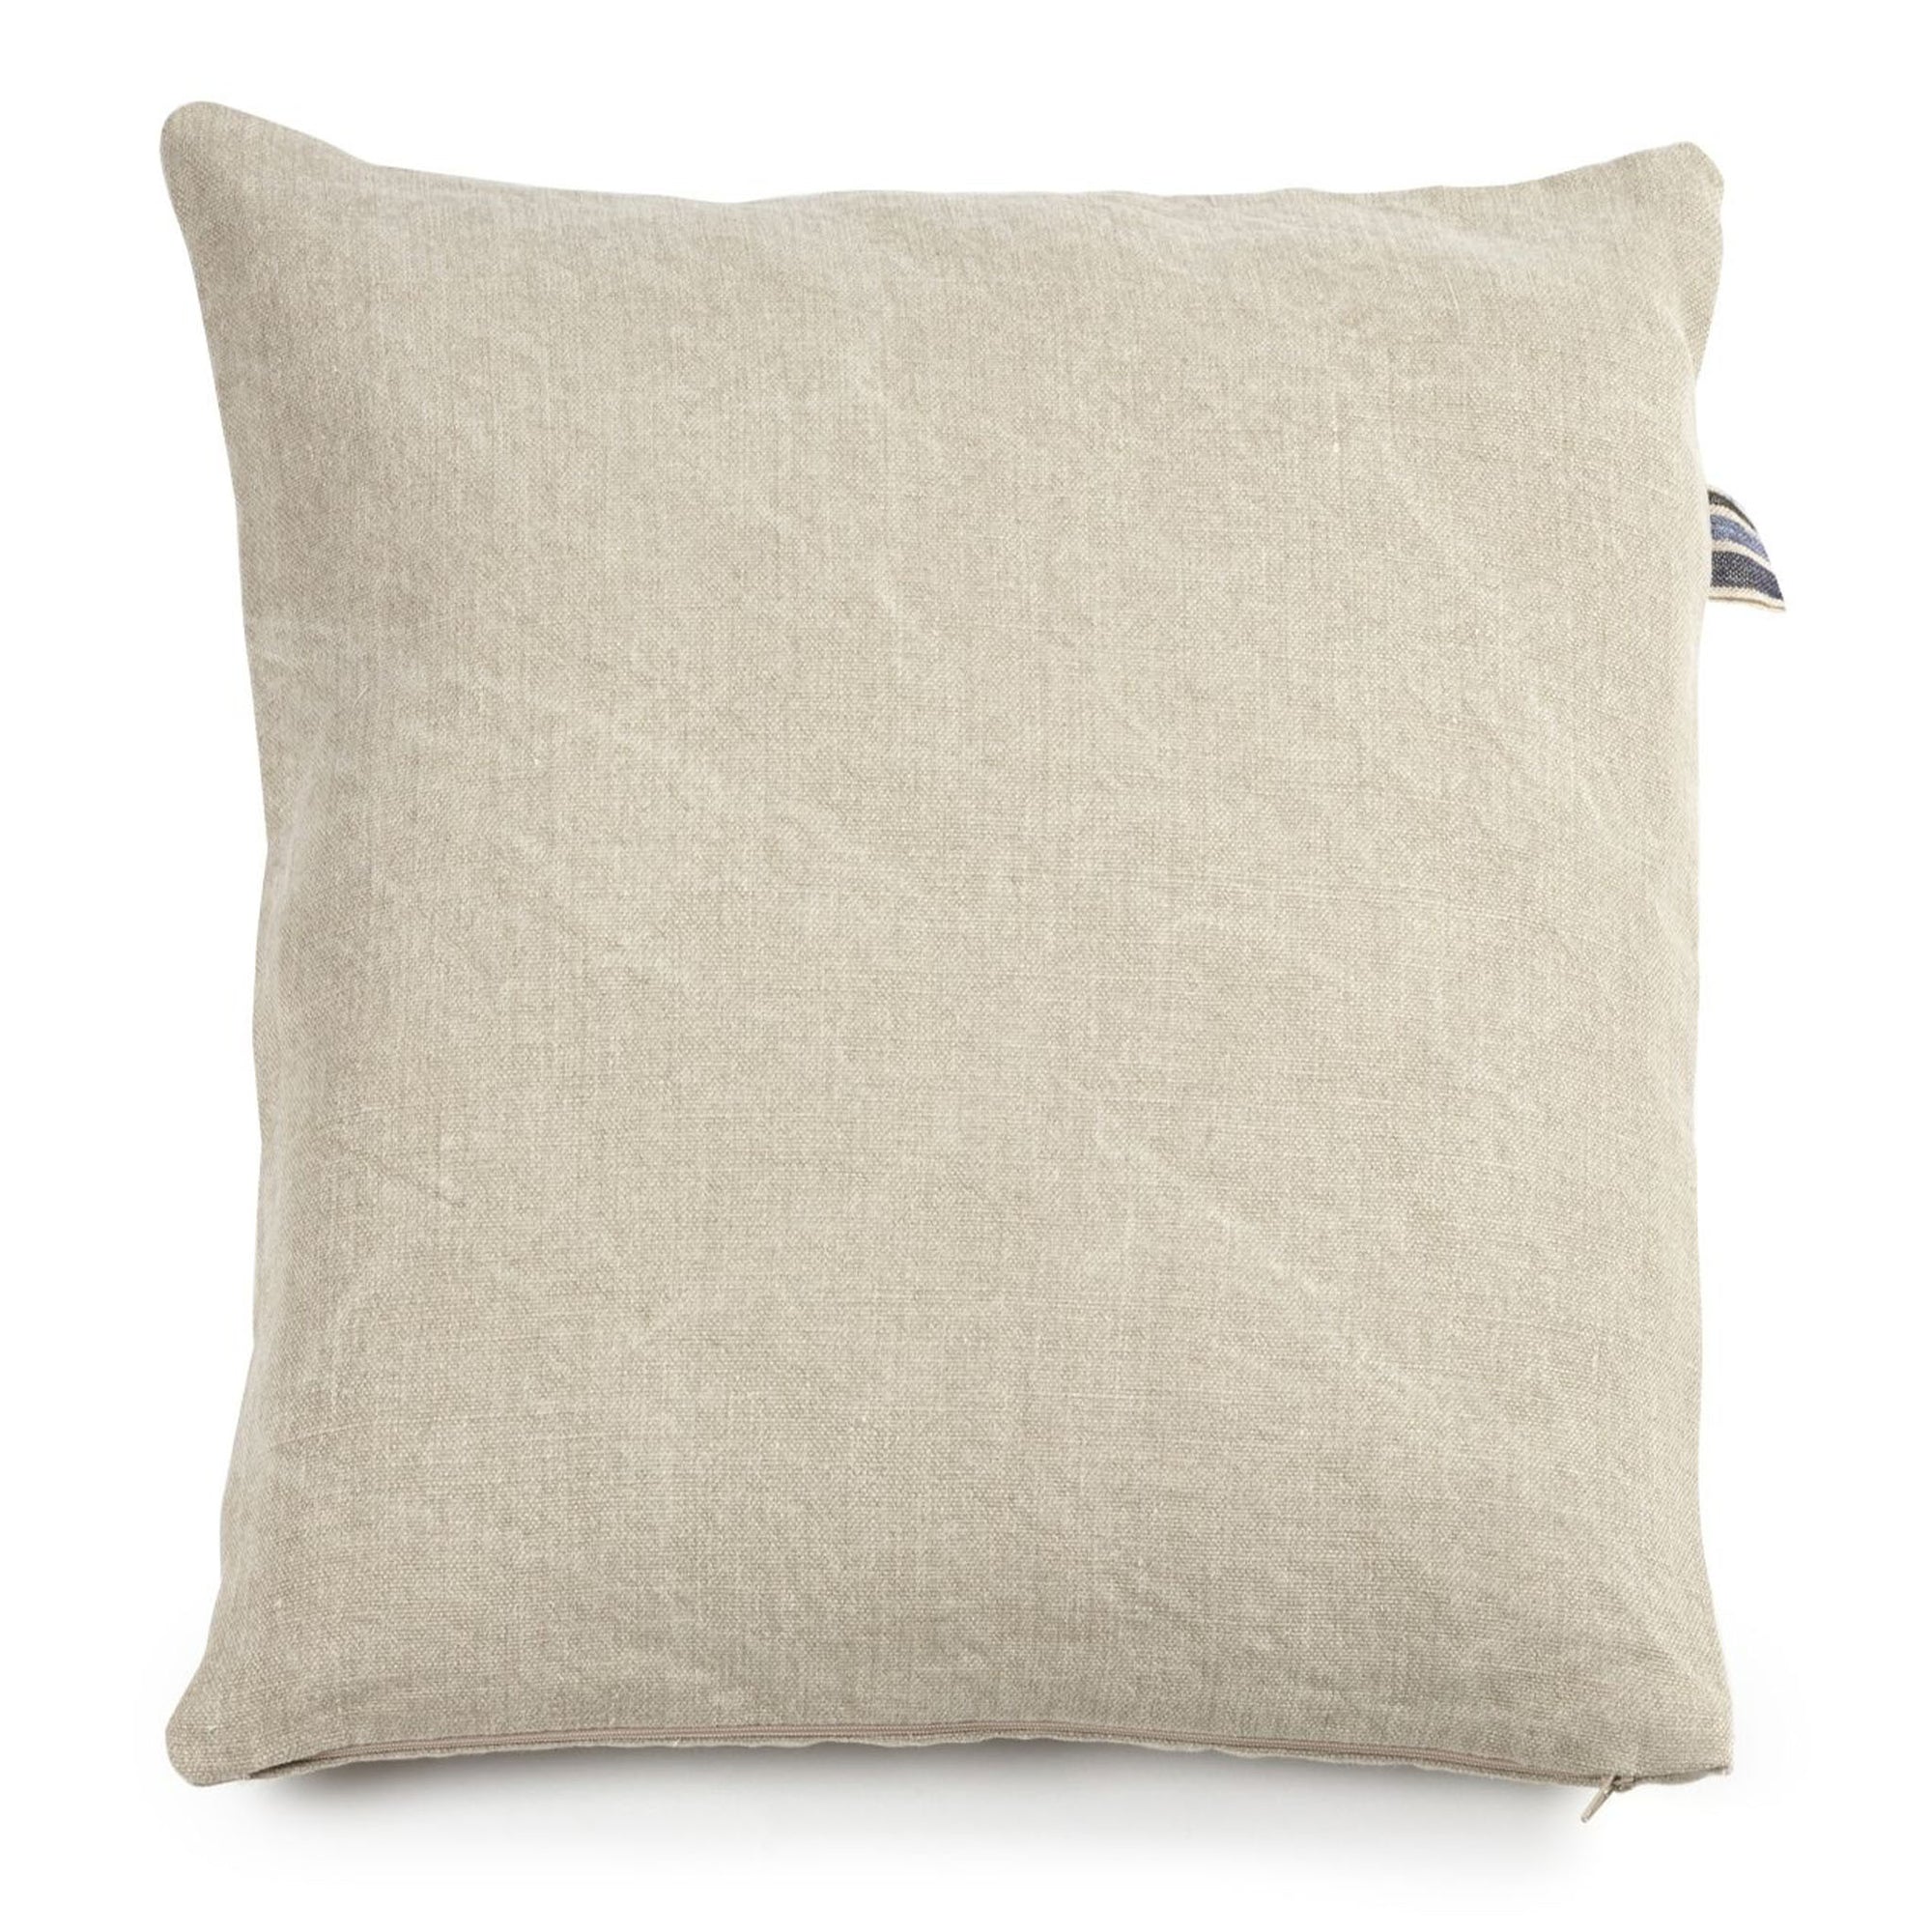 Galloper Flax Pillow Cover